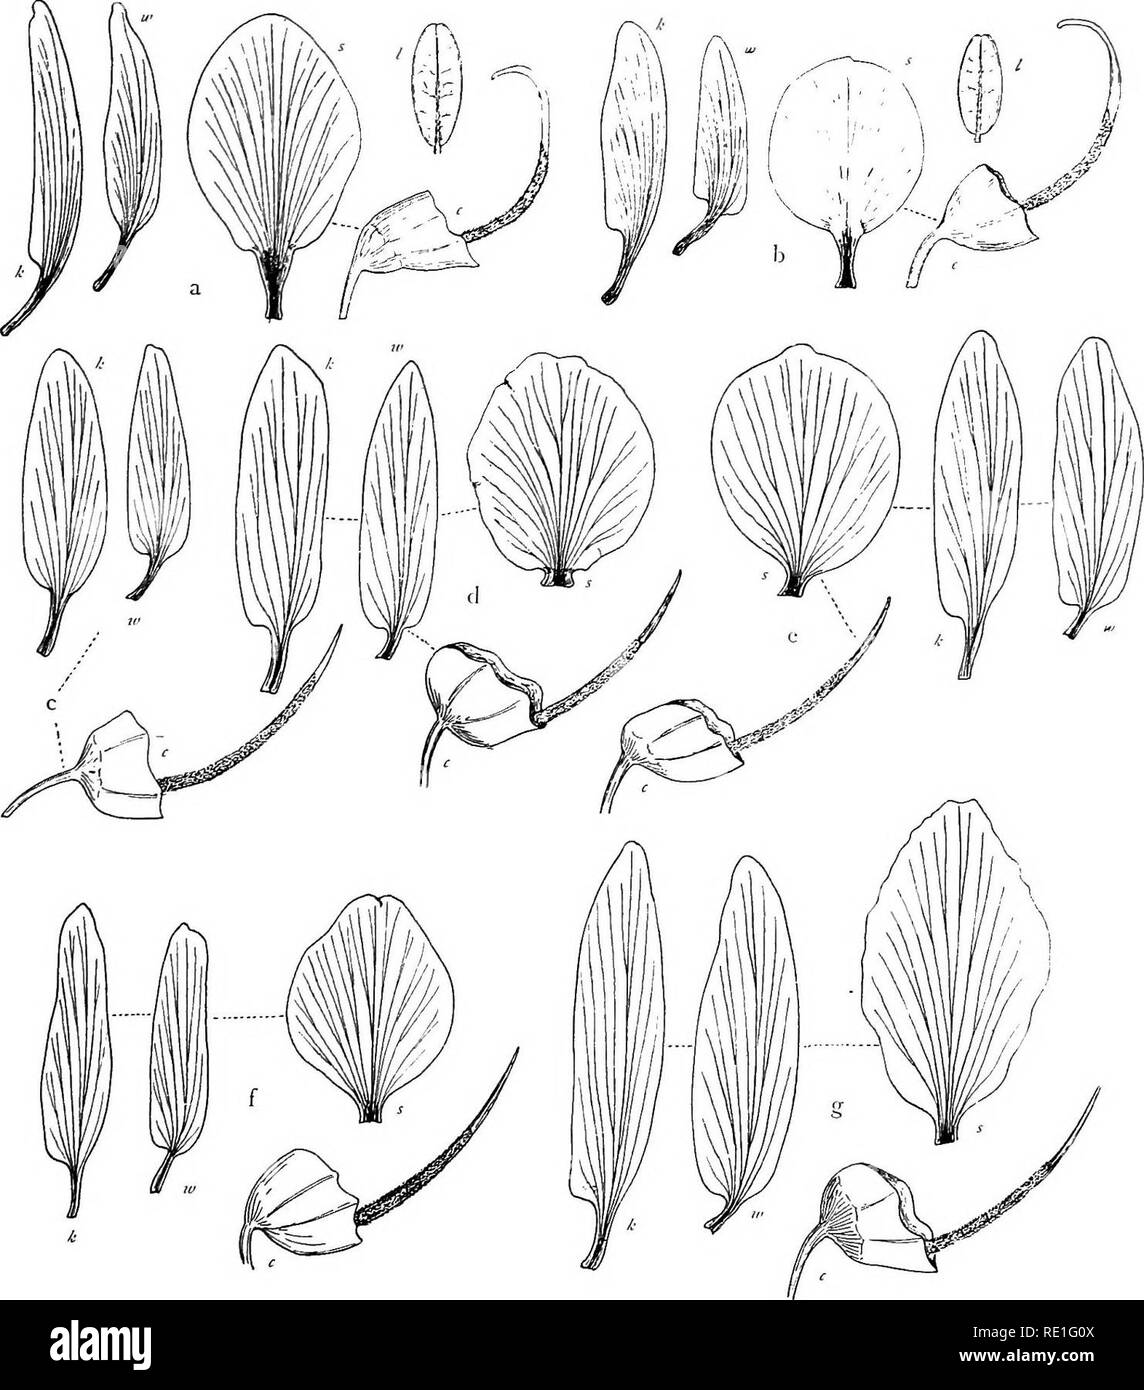 . The phanerogams of the Juan Fernandez Islands. Botany. THE PHANEROGAMS OF THE JUAN FERNANDEZ ISLANDS 141. Fig. 12. Analysis of Sophora flowers: a S. fernandeziana orig. Germain; b S. Reedeana orig. Reed; c S. masafuerana leg. Johow (standard missing); d S. vtetrafitera* from Chiloe leg. Skottsberg; e S. umacnabtana* from Valdivia, leg. Philippi; f 5. microphylla and g 5. grandi- flora from New Zealand. All nat. size. — k keel, w wing, s standard, c calyx, /leaflet, lower side. foliorum tenui; foliola minora, pro longitudine latiora, glabriuscula. Folia 4—7 cm longa; foliola 6—8(—io)-paria, s Stock Photo